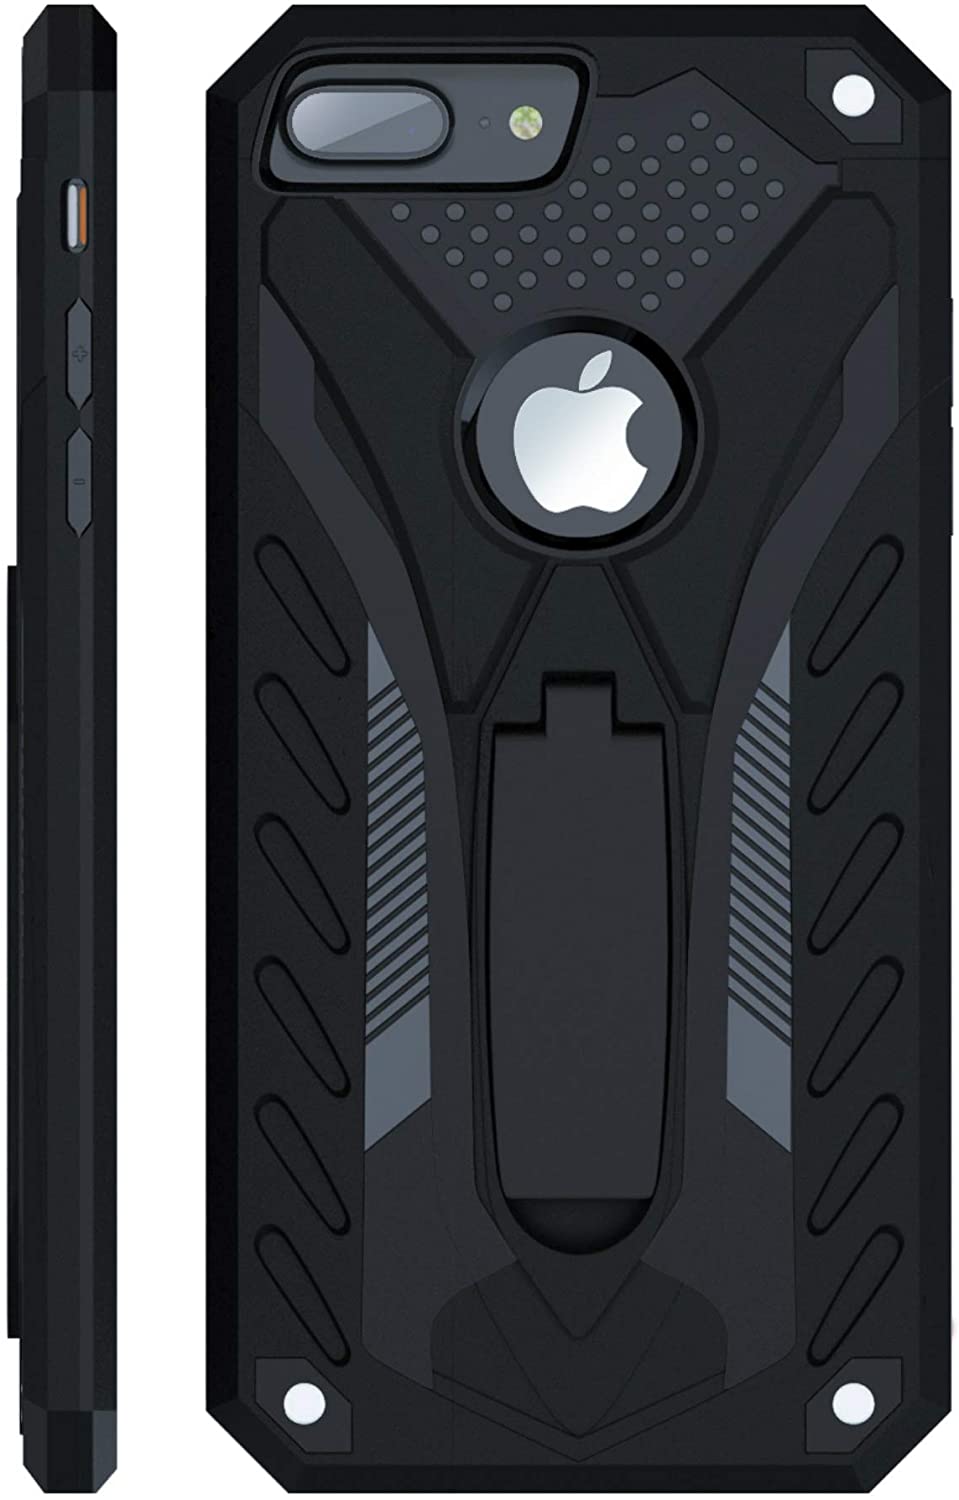 iPhone 7 Plus / iPhone 8 Plus Hard Case with Kickstand Black